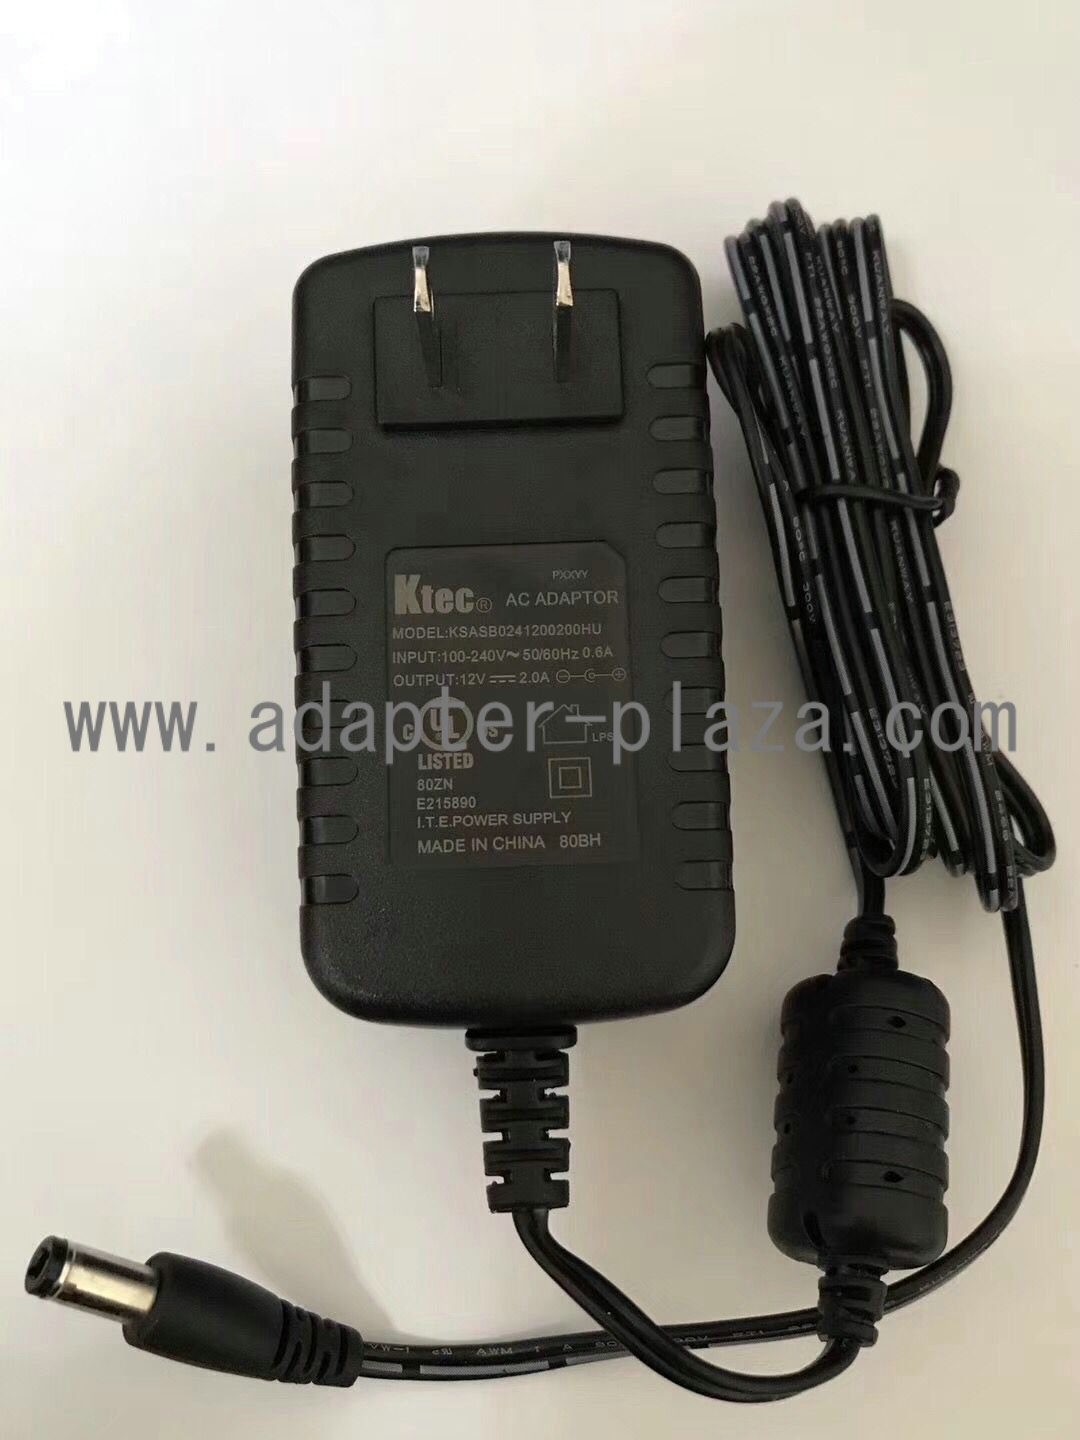 *Brand NEW* Ktec KSASB0241200200HU 12V 2.0A AC DC Adapter POWER SUPPLY